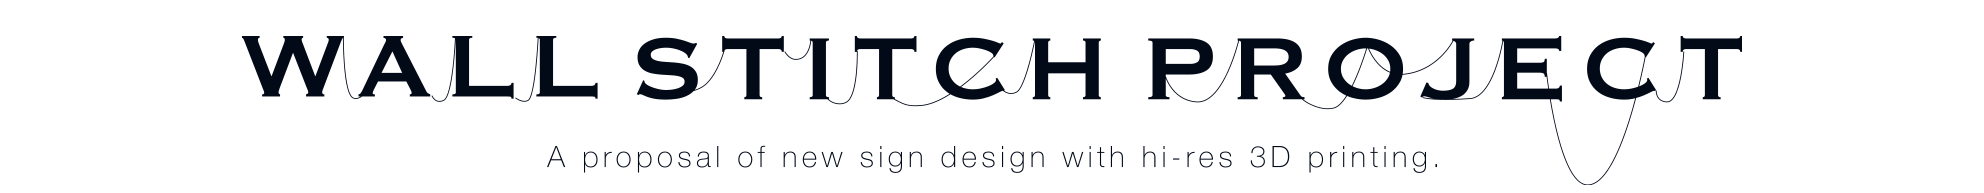 logo-cover-3D-wall-stitch-project-yoy-ksdl